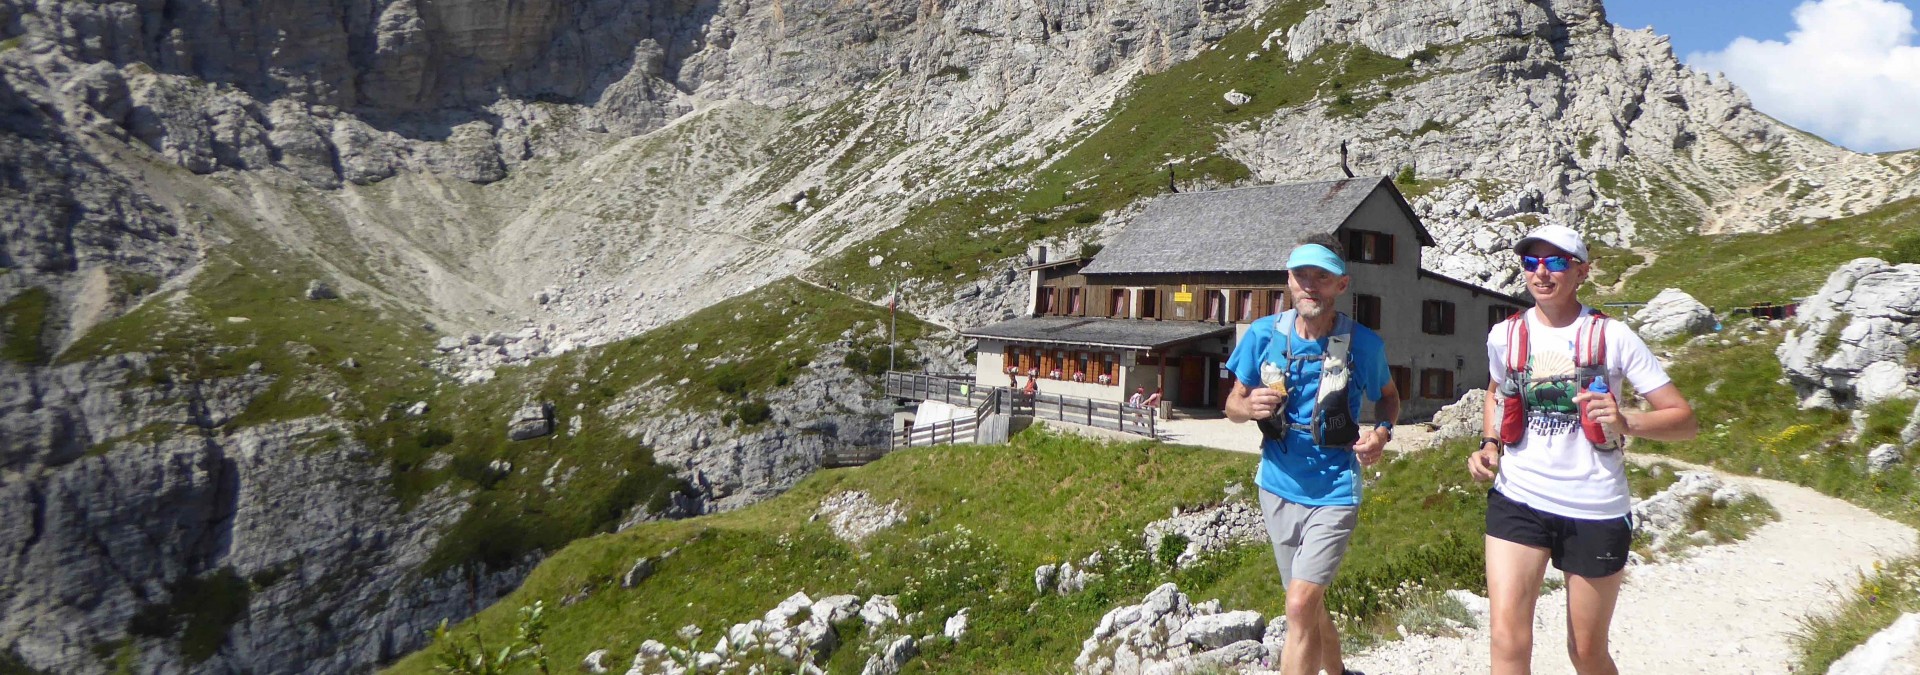 Trail run the Dolomites